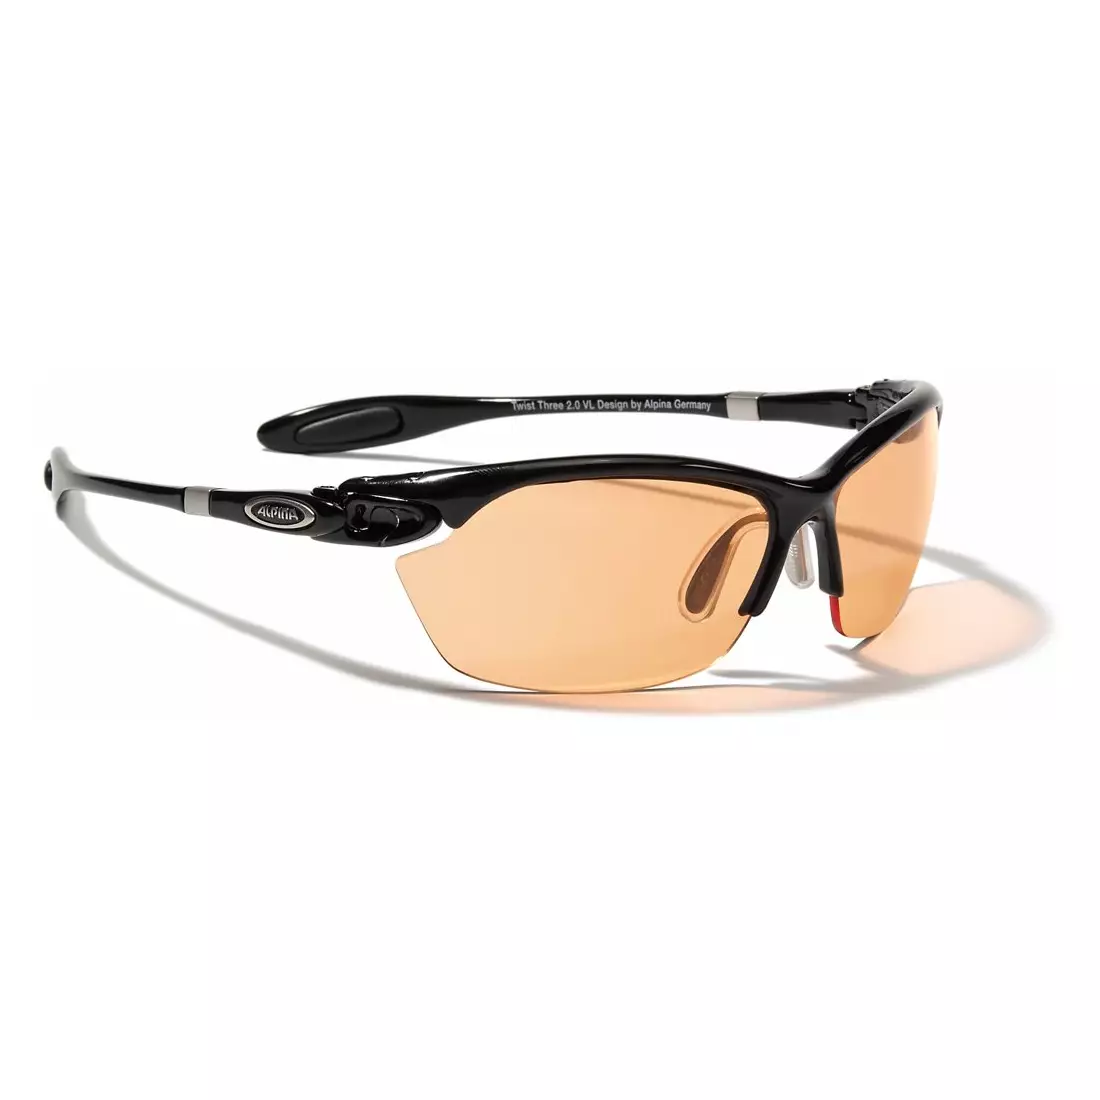 ALPINA TWIST THREE 2.0 VL - sports glasses, photochromics - color: Black